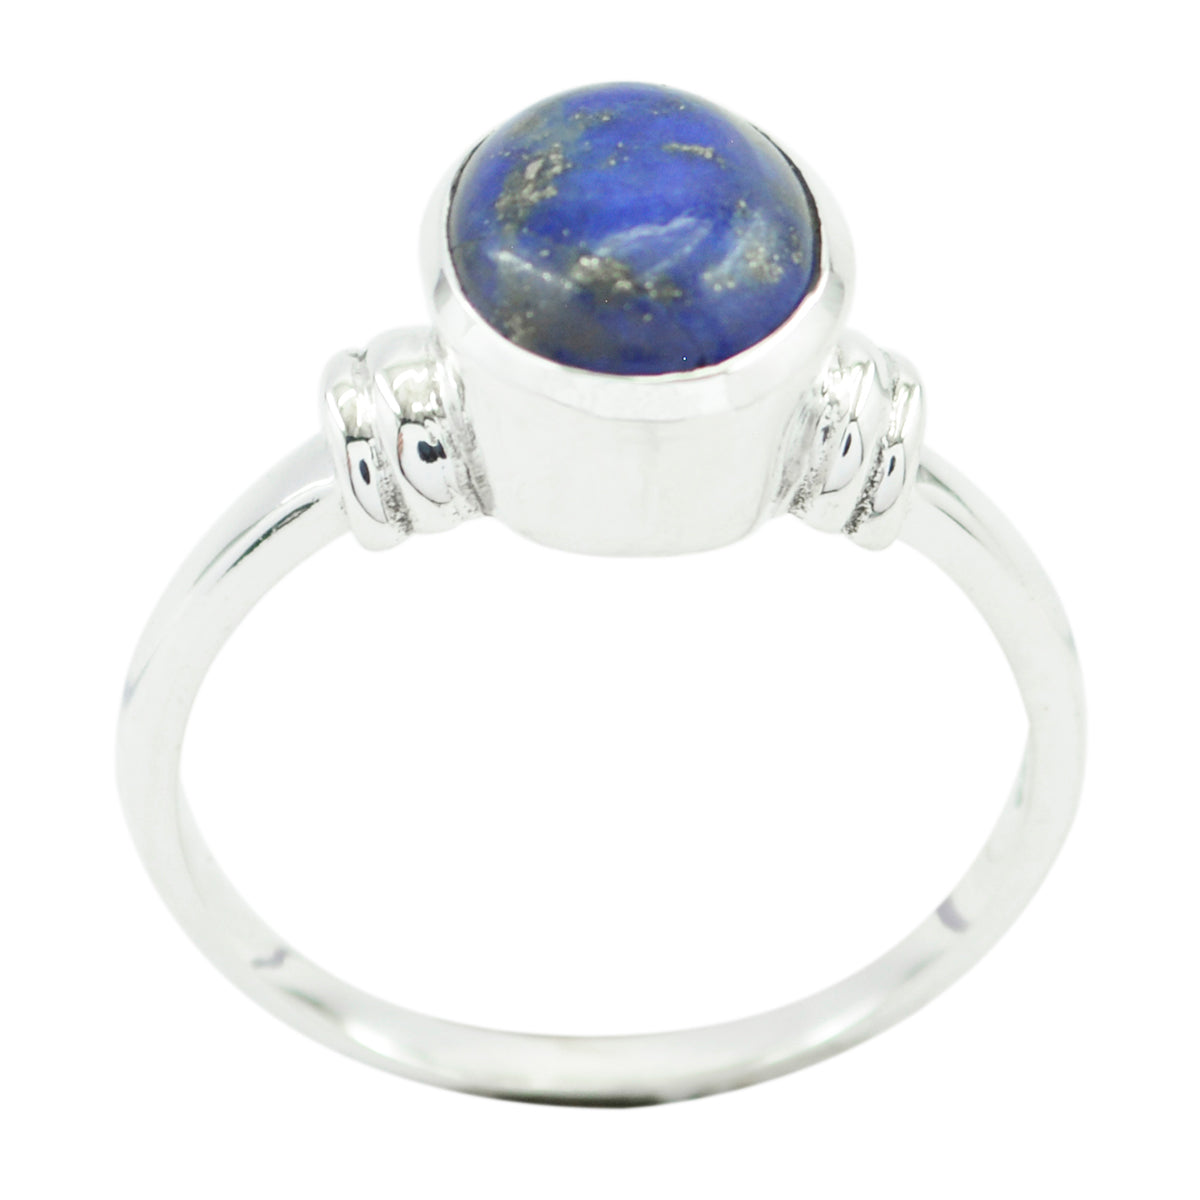 Riyo Well-Formed Gem Lapis Lazuli Solid Silver Ring Resin Jewelry